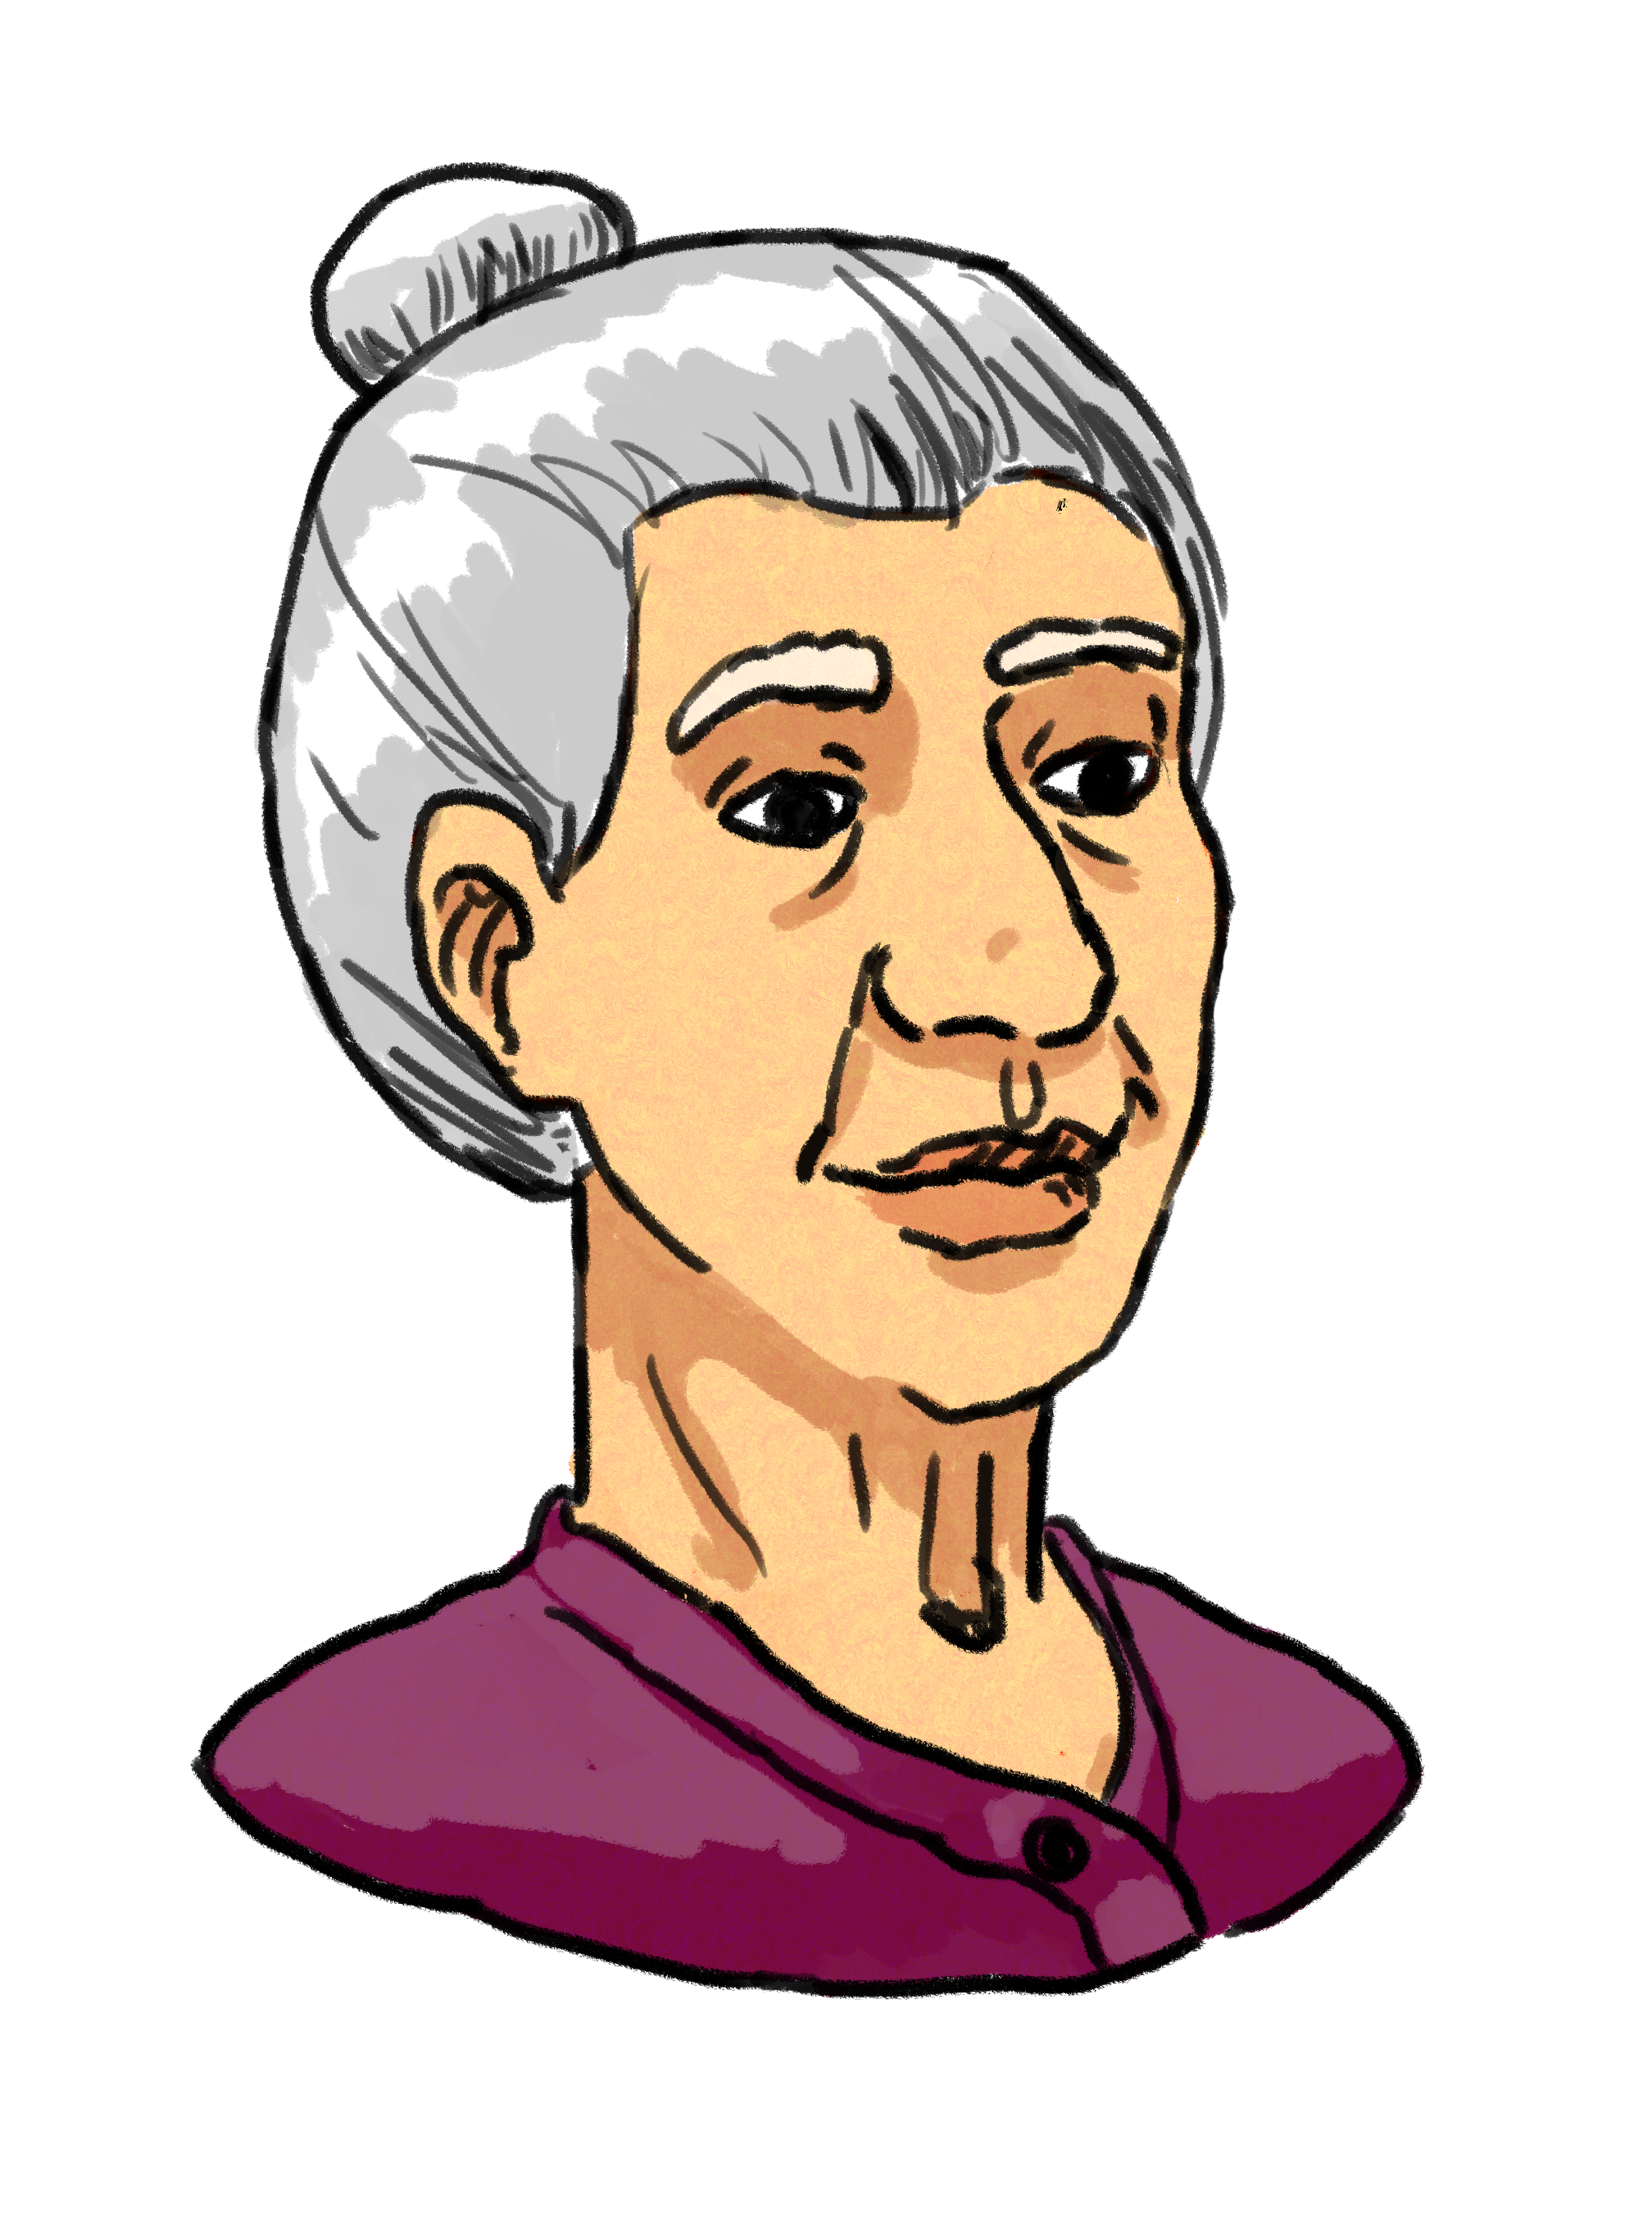 drawn illustration of the head of Jutta